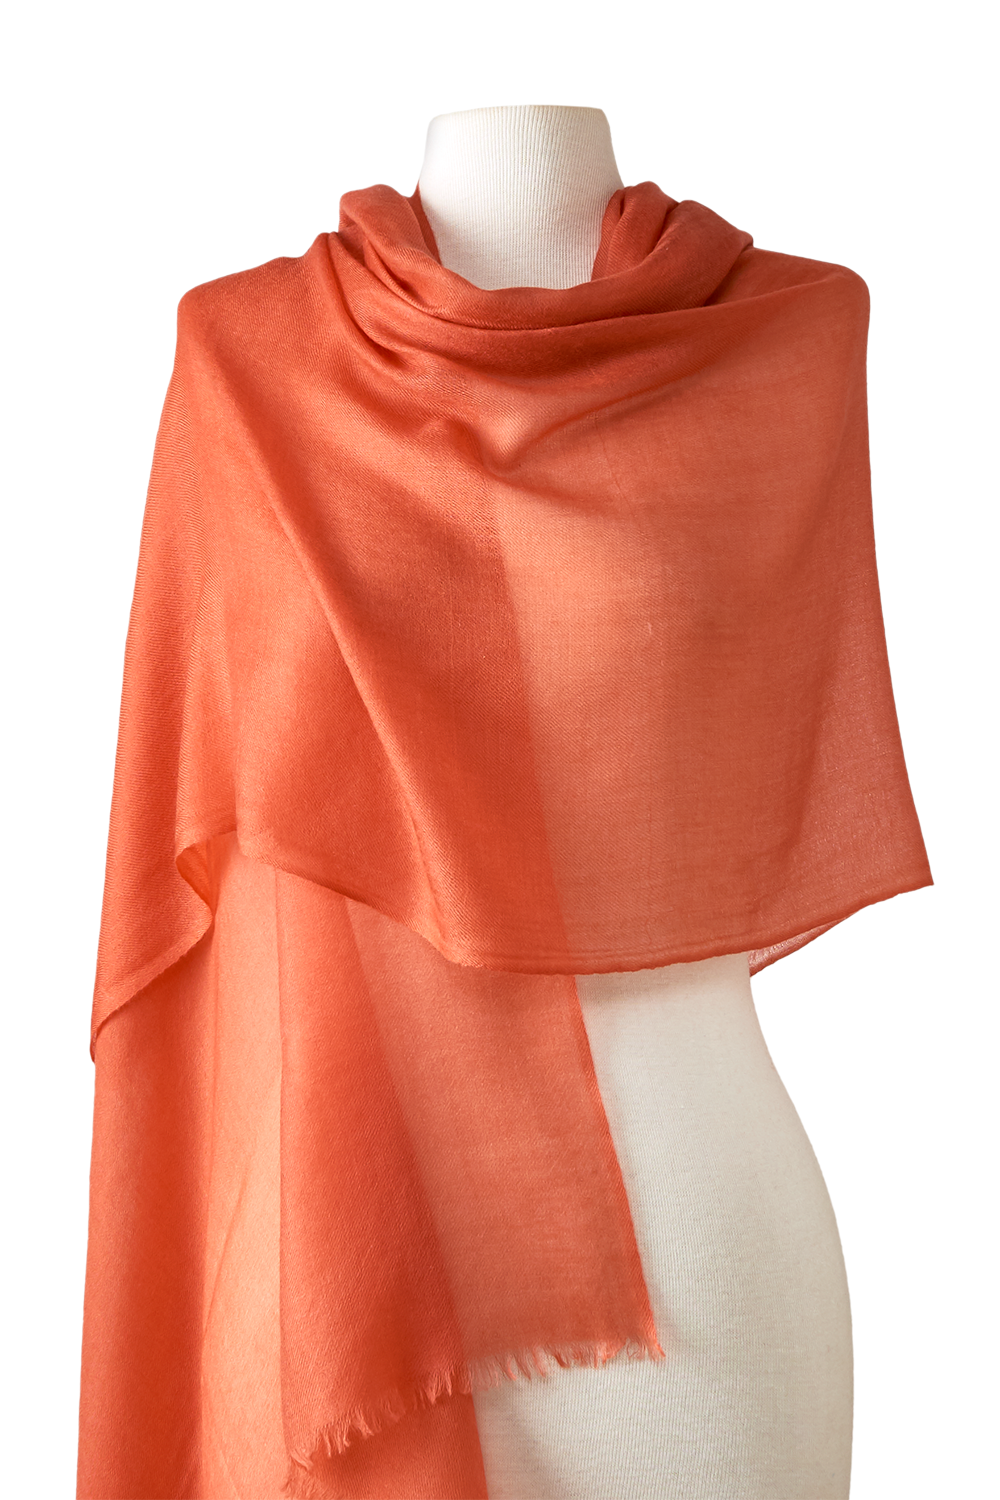 Himalayan cashmere orange